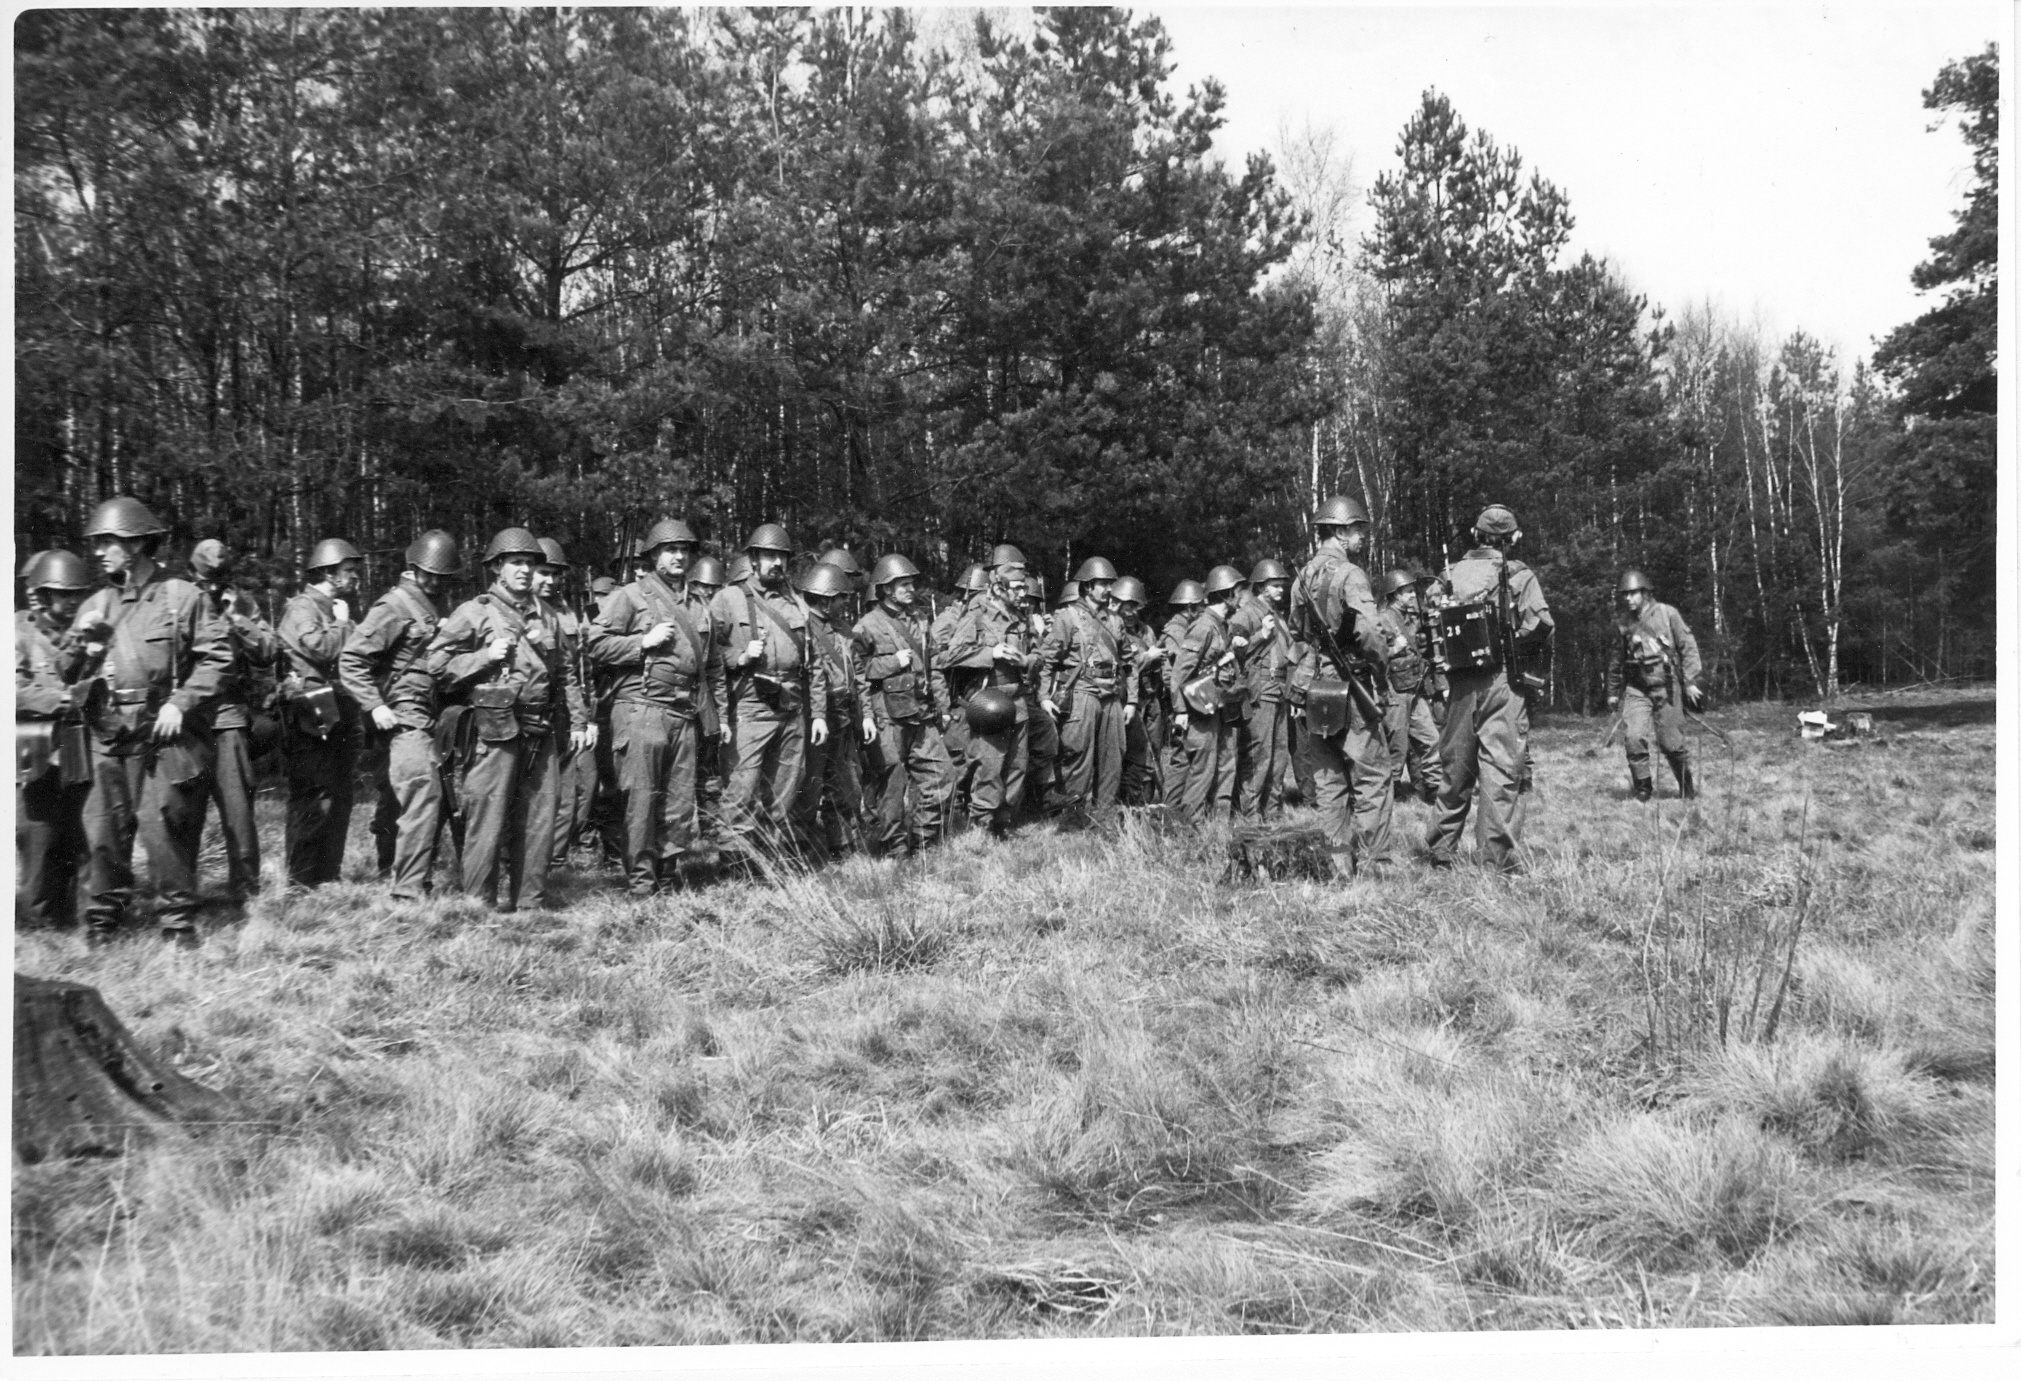 Kampfgruppe bei Übung im Wald (Industriesalon Schöneweide CC BY-NC-SA)